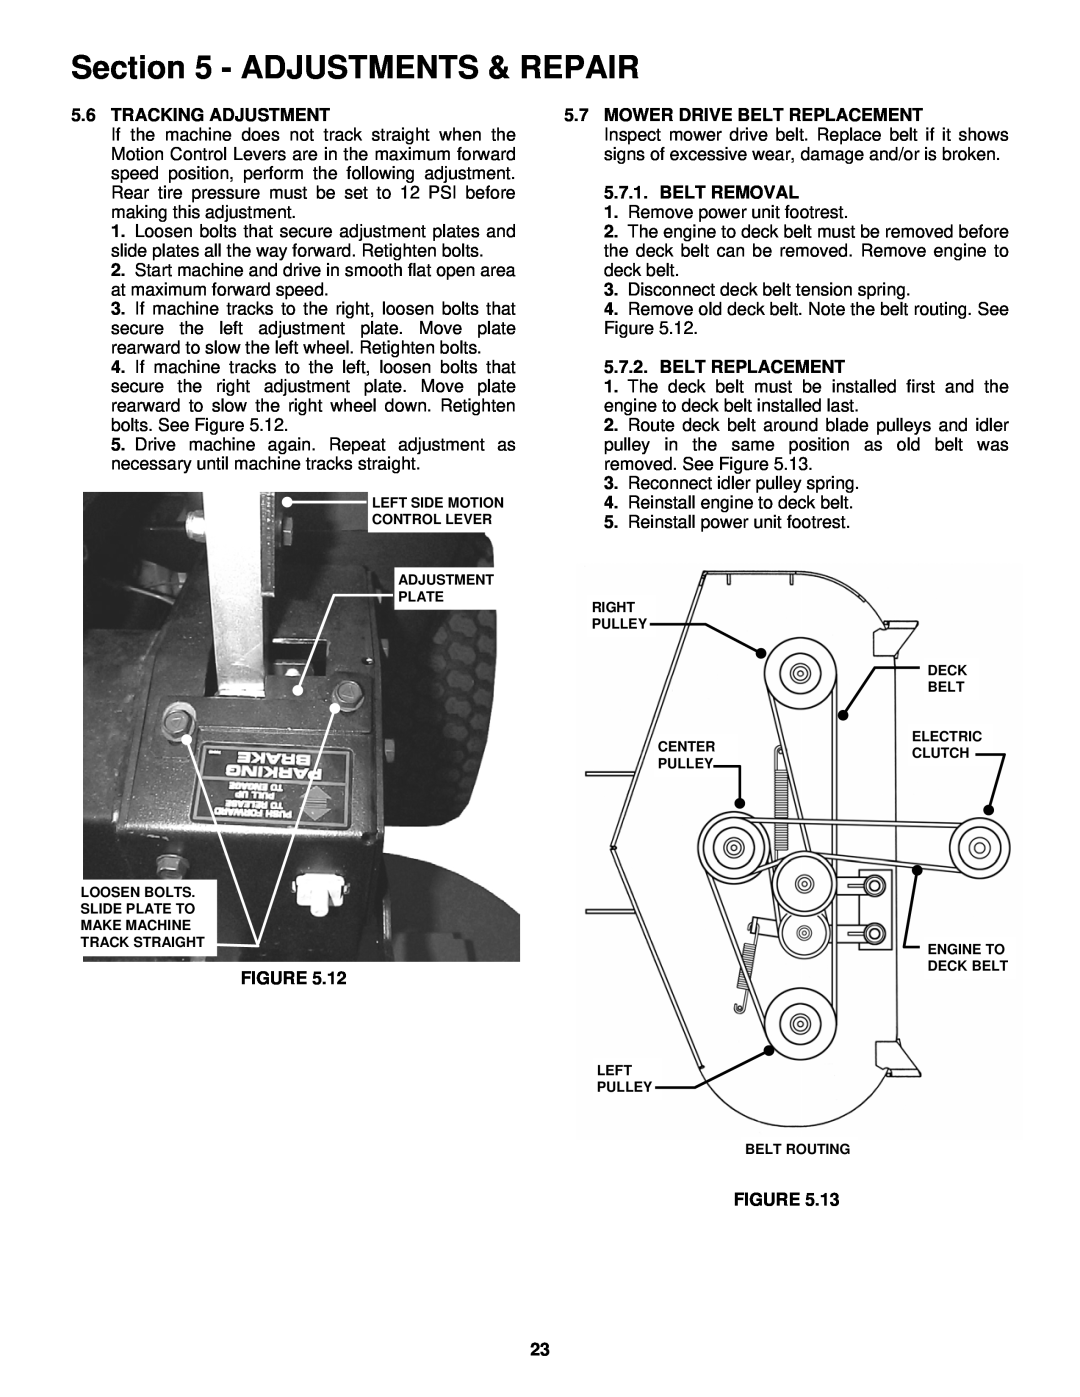 Snapper NZM19481KWV Adjustments & Repair, Tracking Adjustment, Mower Drive Belt Replacement, Belt Removal 